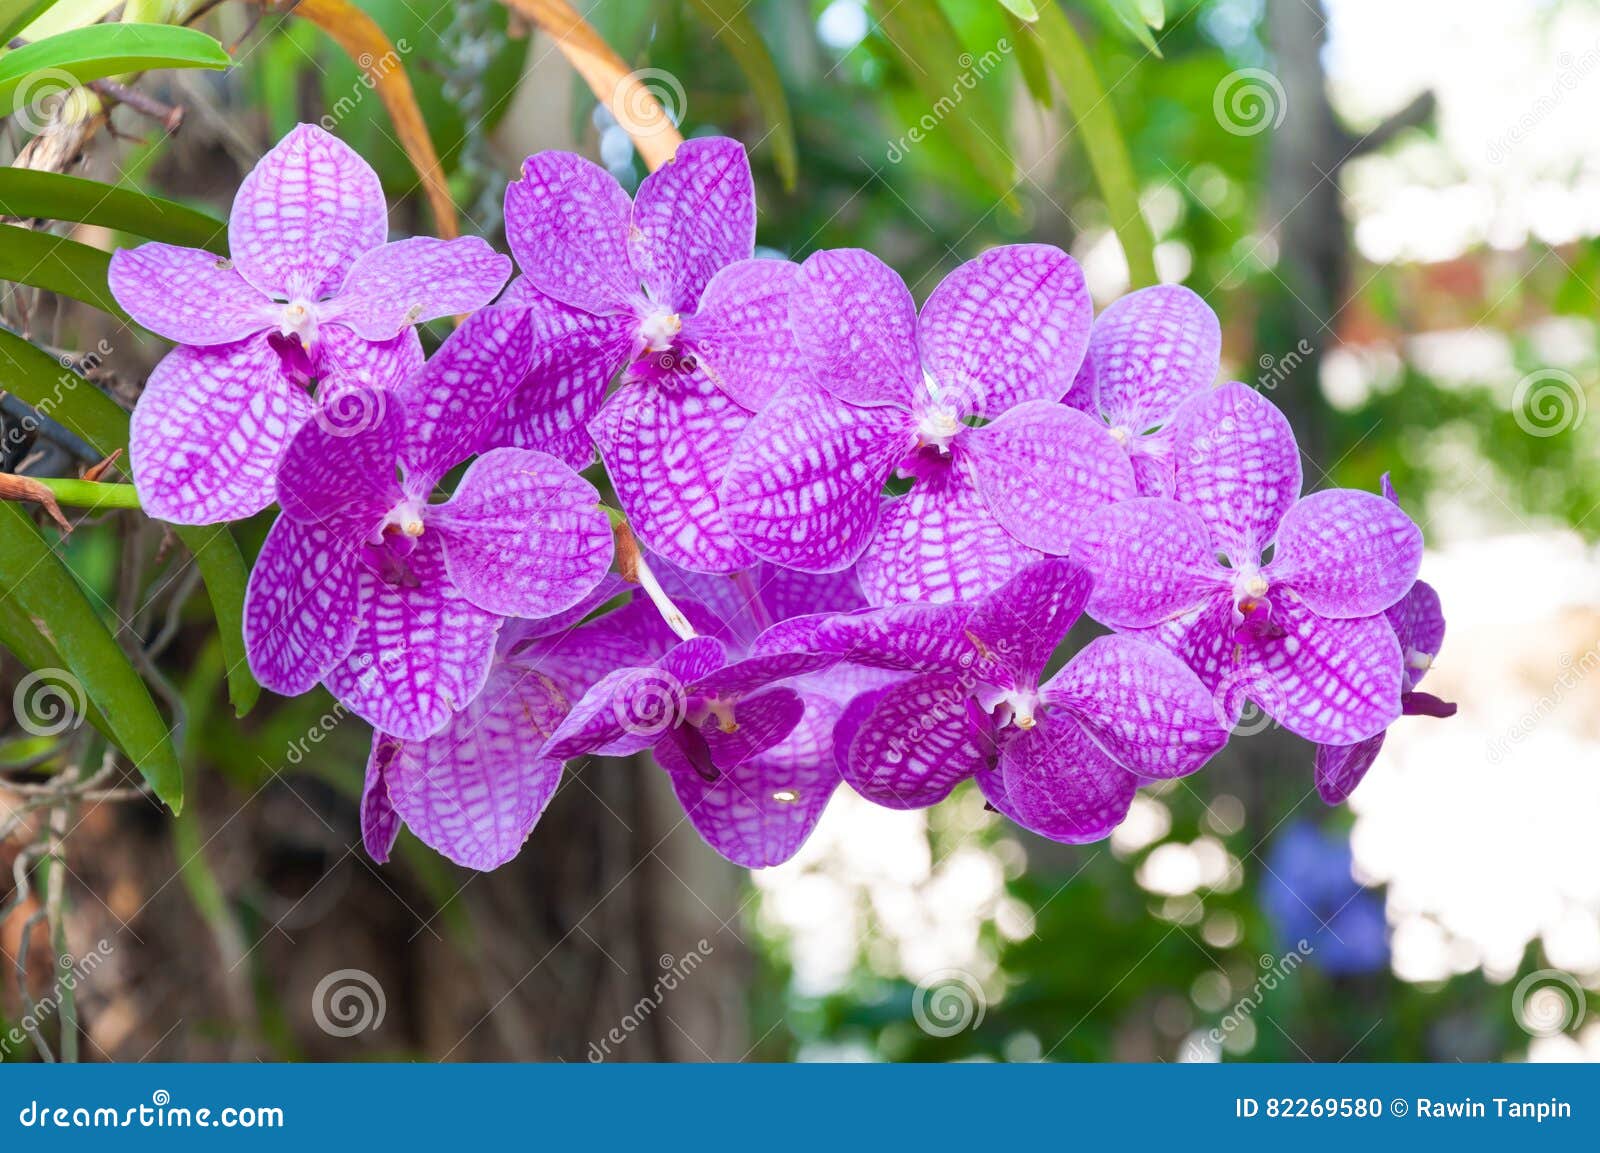 Beautiful Orchid Flowers Violet Hybrid Vanda Stock Photo - Image of branch,  ascocenda: 82269580